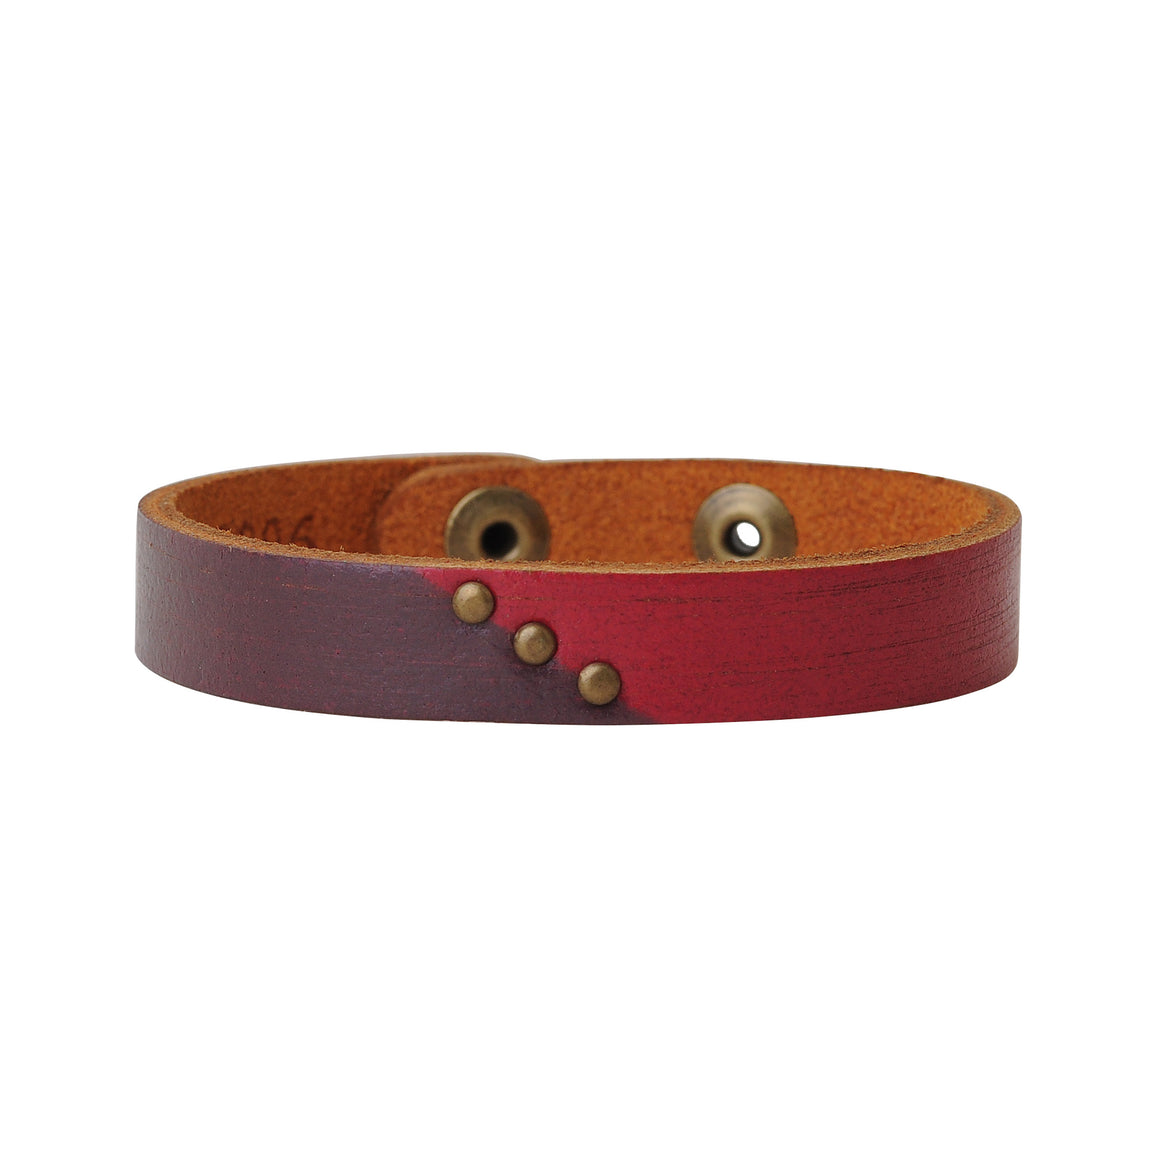 2096 - Two tone leather bracelet